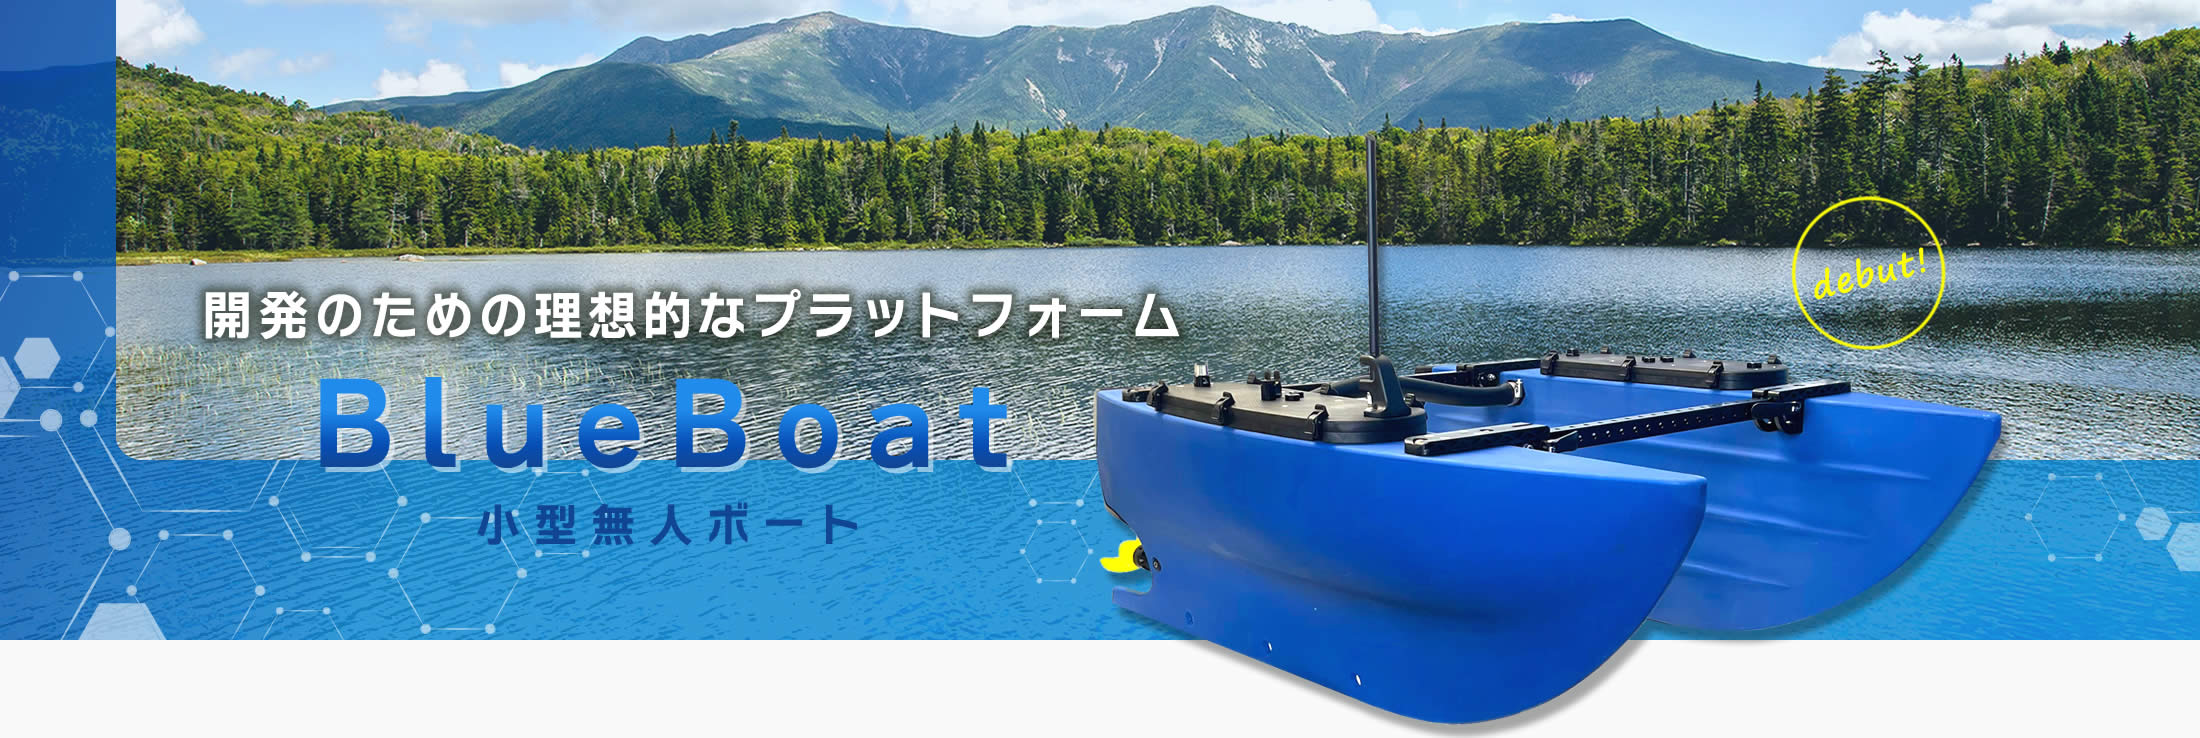 BlueBoat小型無人ボートASVのご紹介